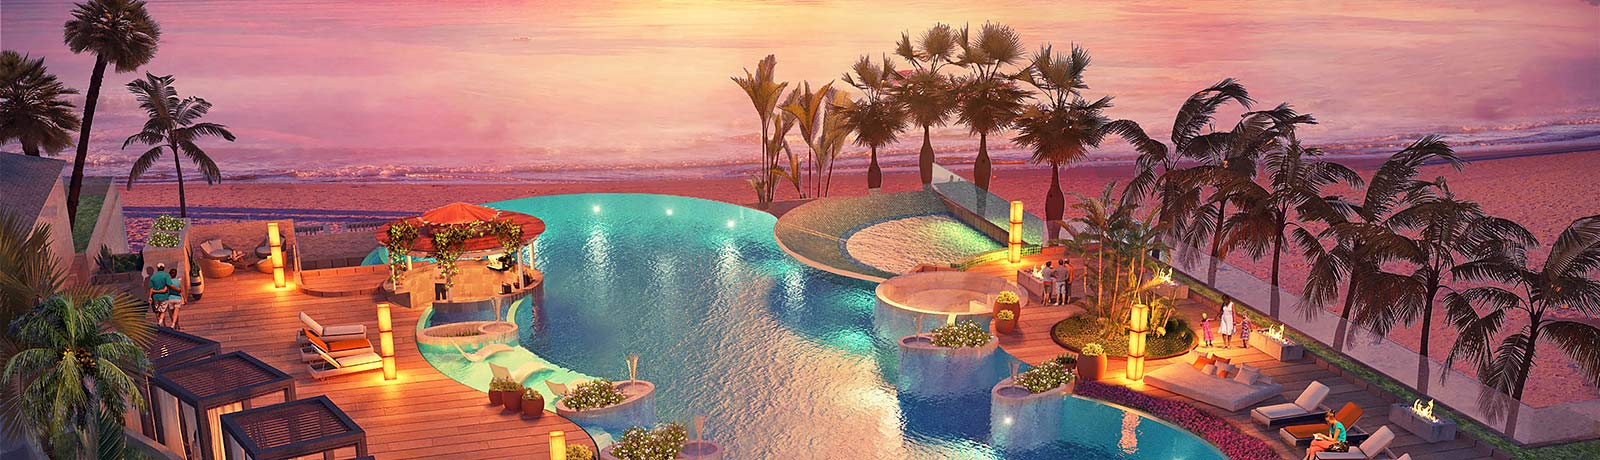 Anichi Resort & Spa: Infinity Pool